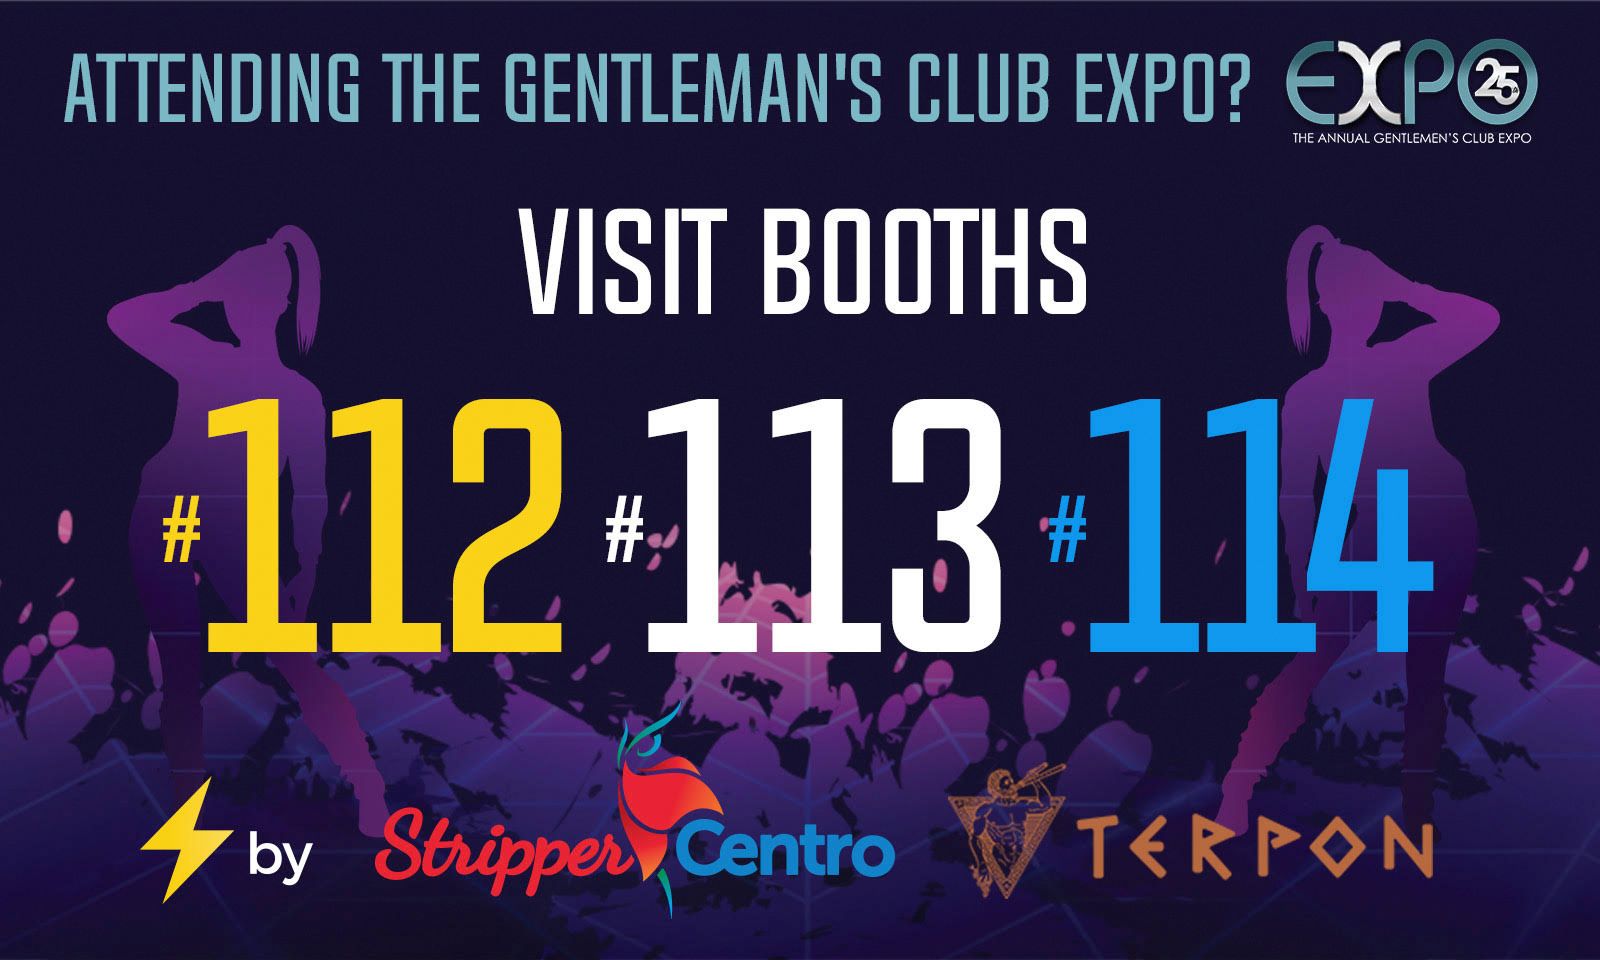 StripperCentro, FanCentro Headed to 25th ED Expo